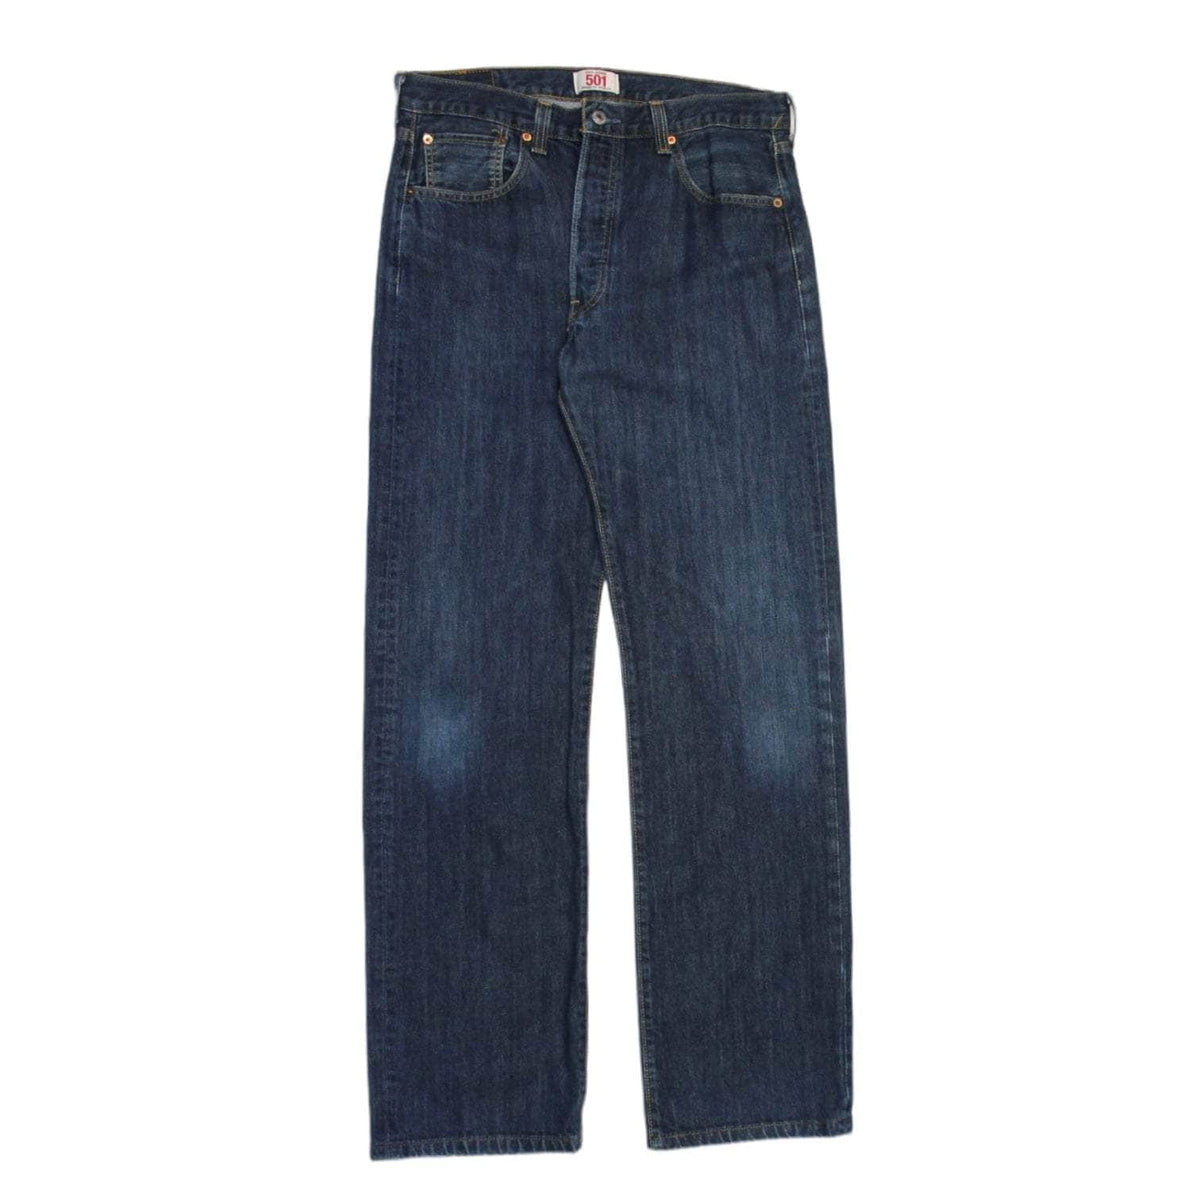 Levis 501 Straight Fit Blue Jeans